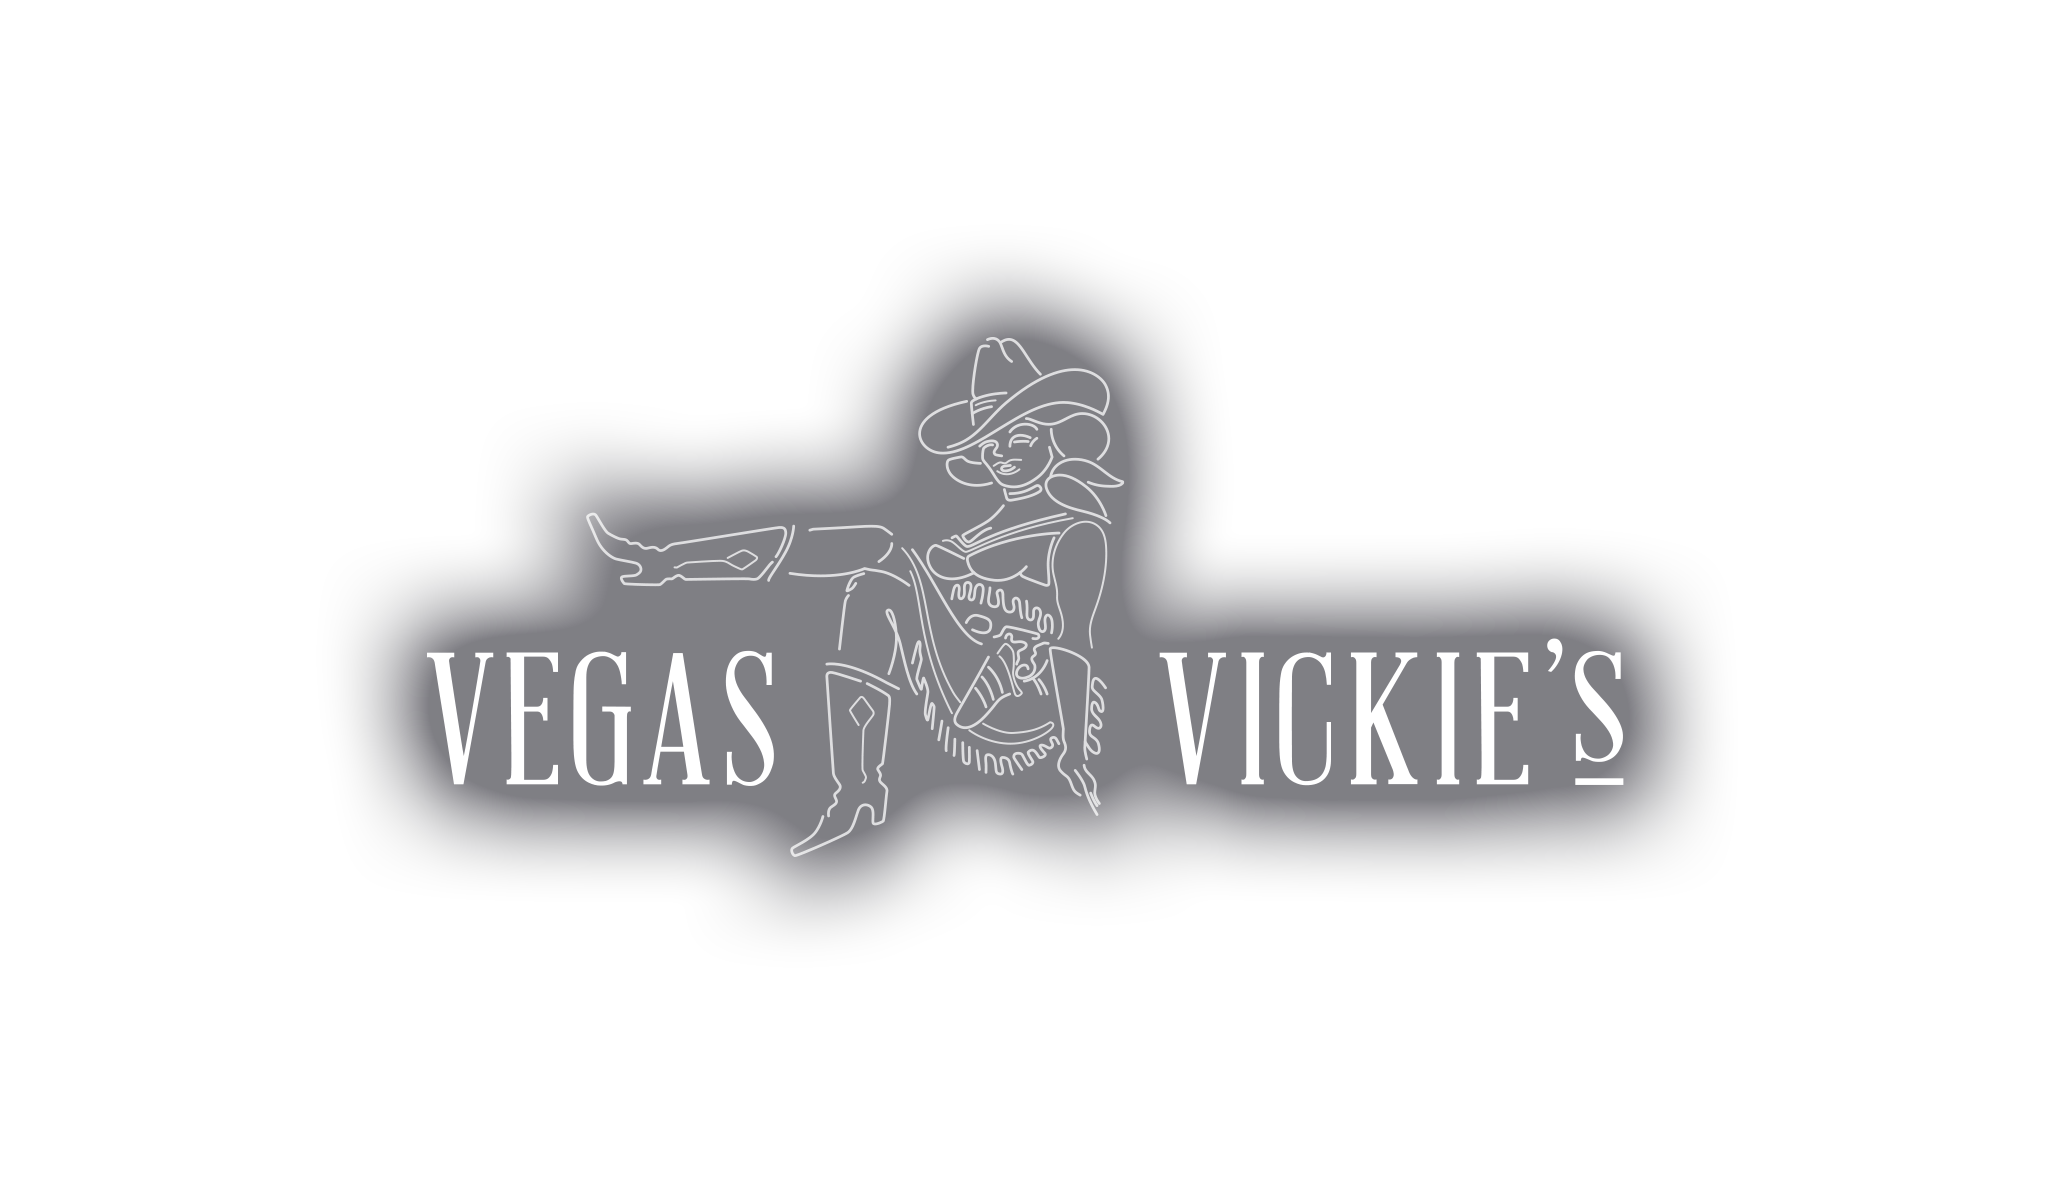 Vegas Vickies